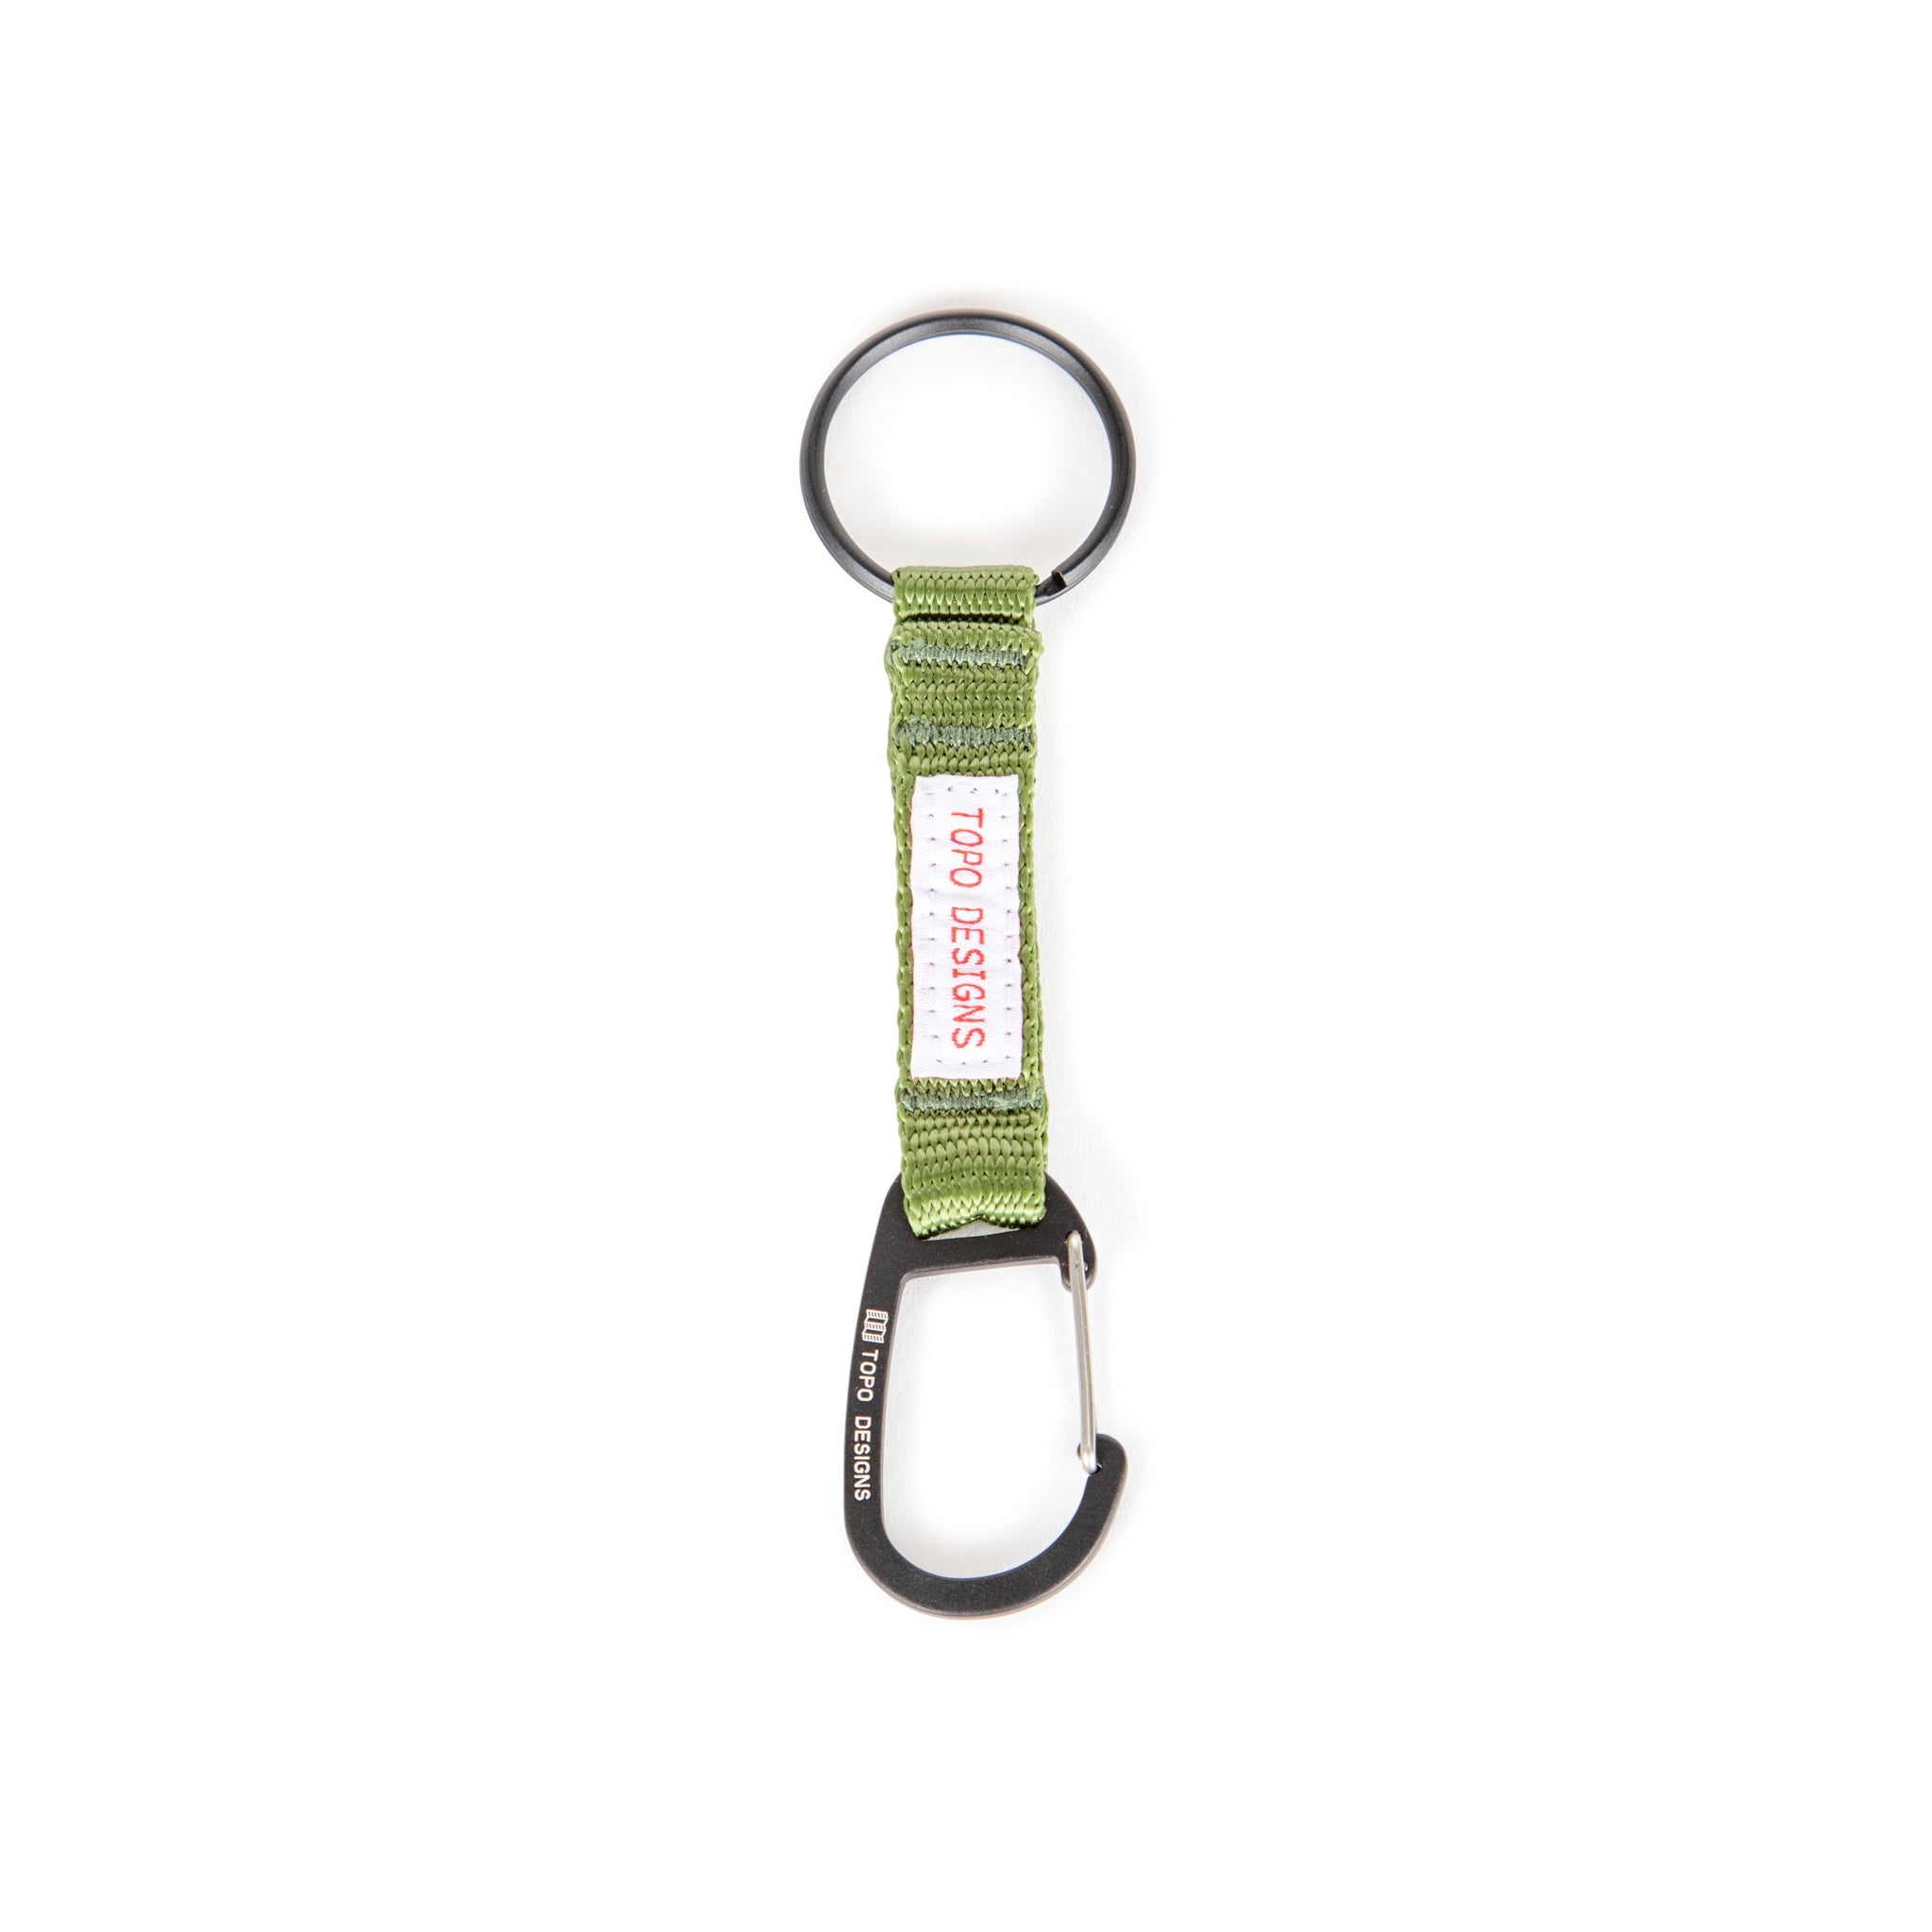 Topo Designs Key Clip carabiner keychain in "Olive" green.